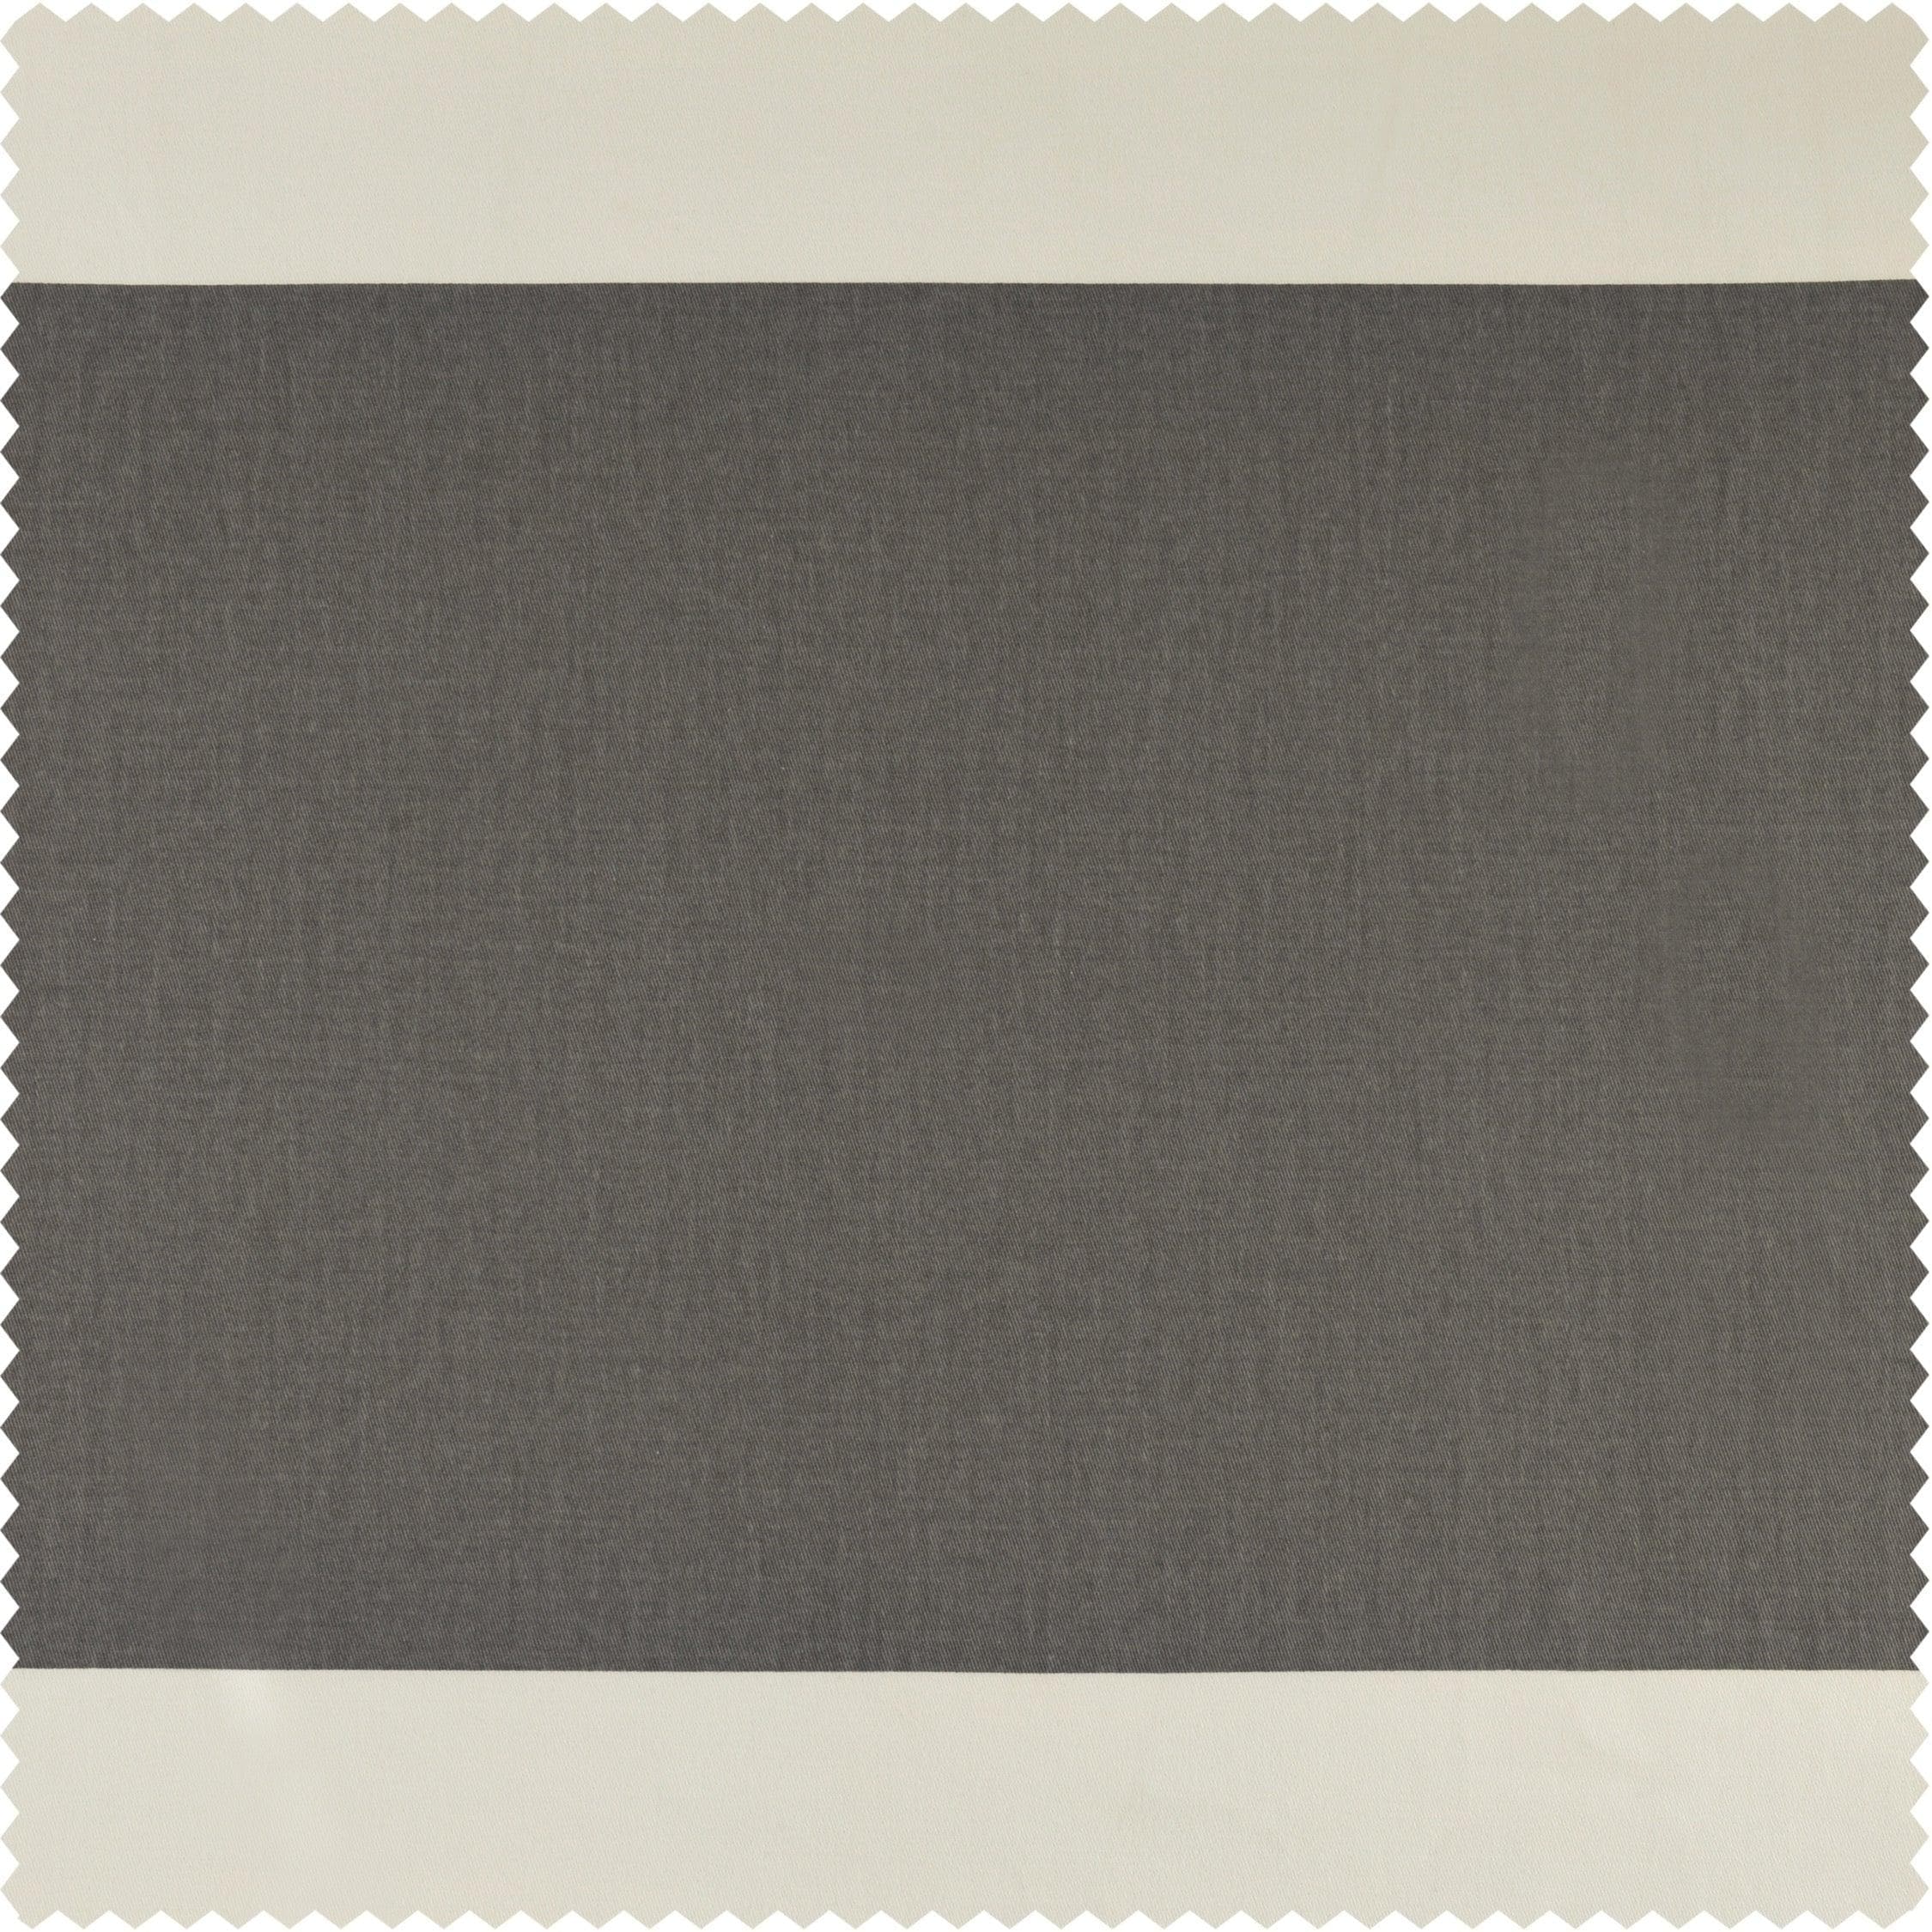 Slate Grey & Off White Horizontal Striped Printed Cotton Room Darkening Curtain